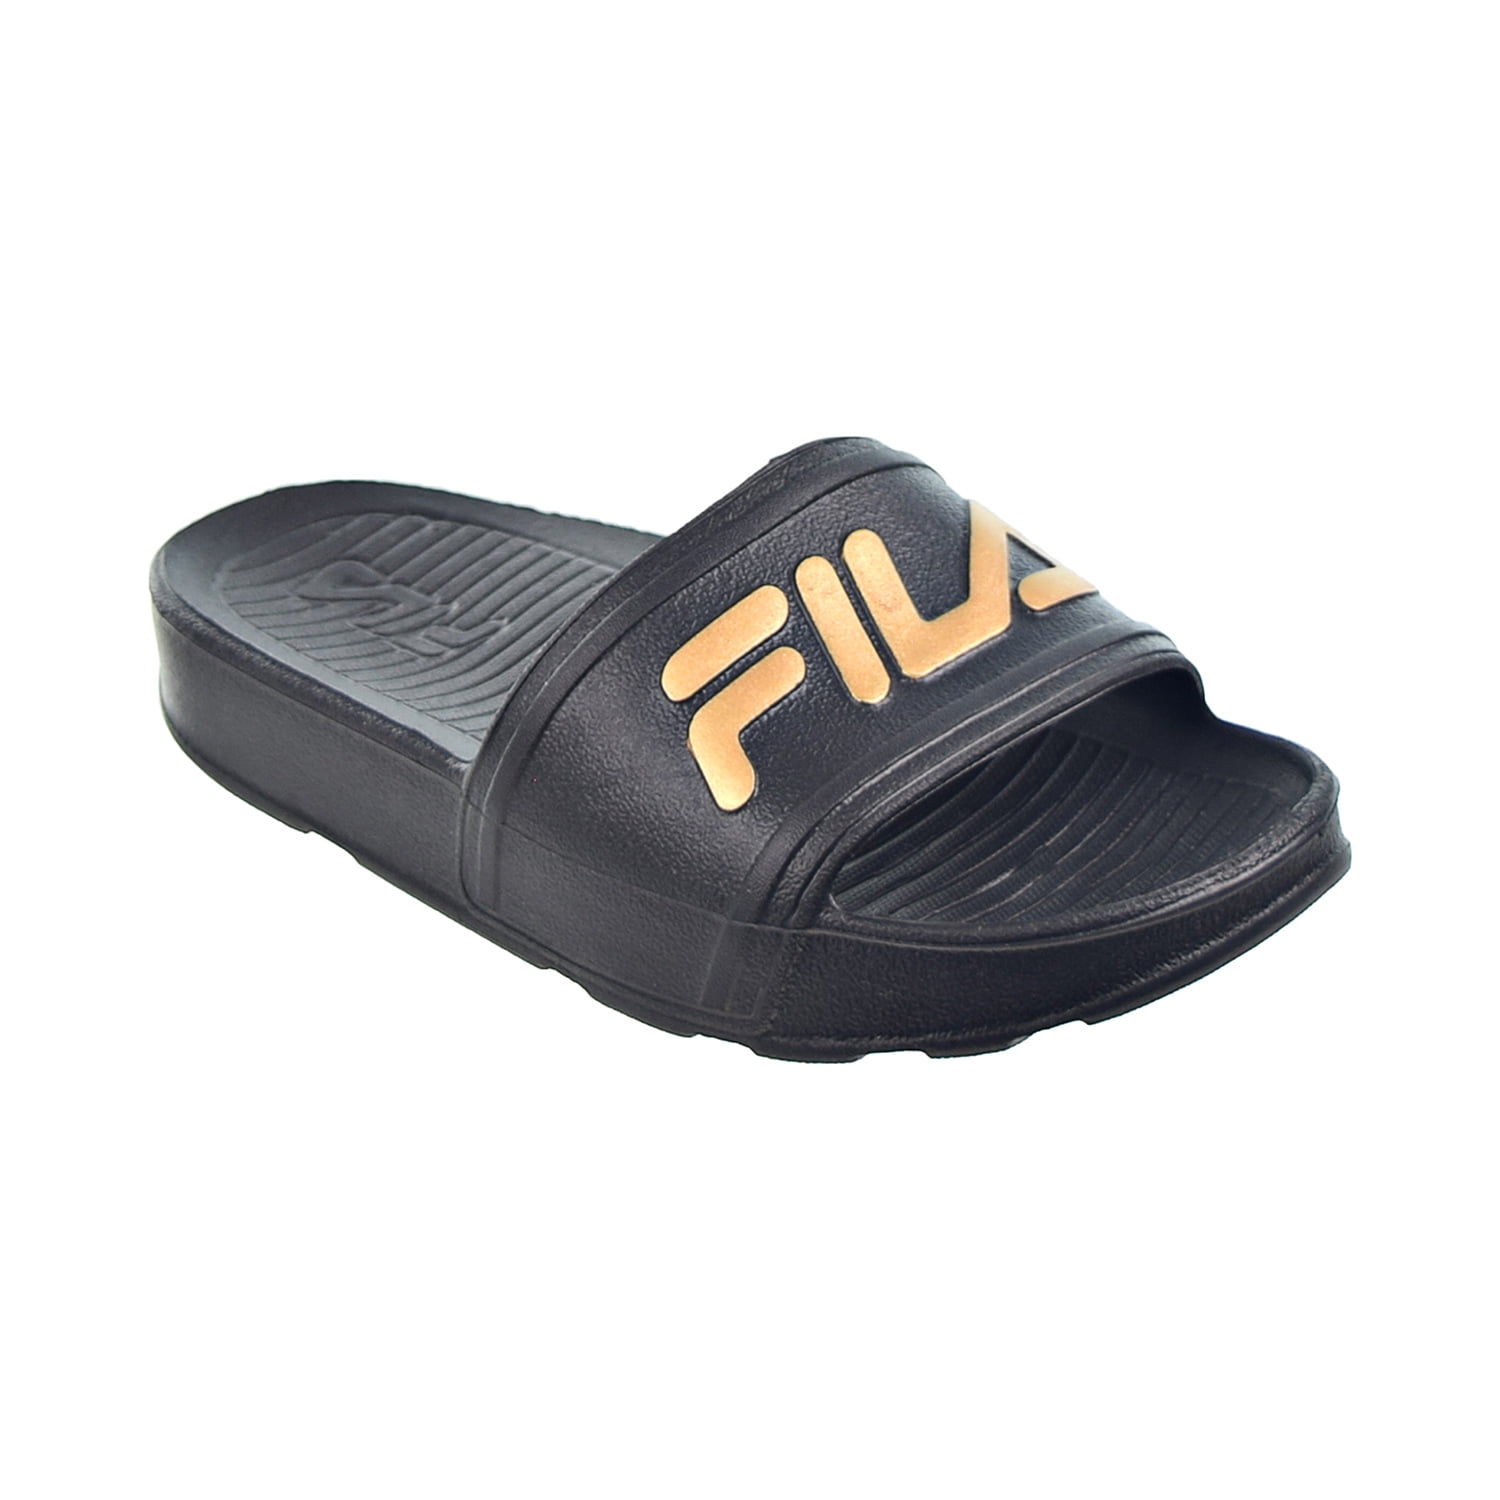 Fila Sleek LT Kids' Slide Sandals Black-Metallic Gold 3sm00001-040 -  Walmart.com